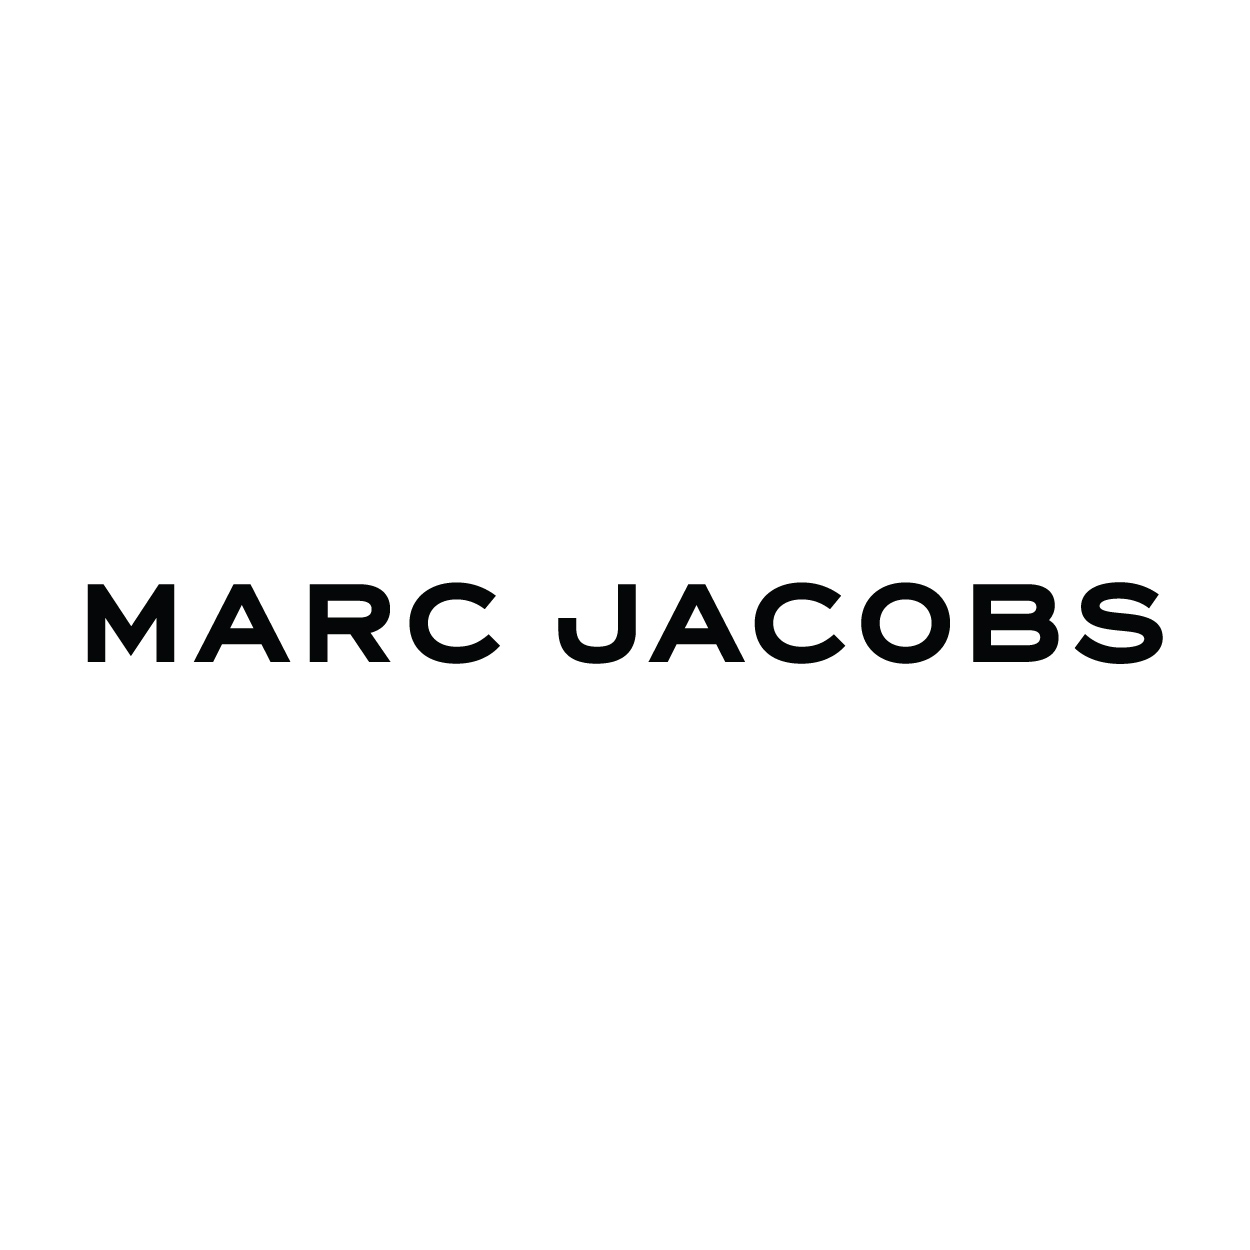 Marc_Jacobs_logo_600x600_Sep2022-01.jpg